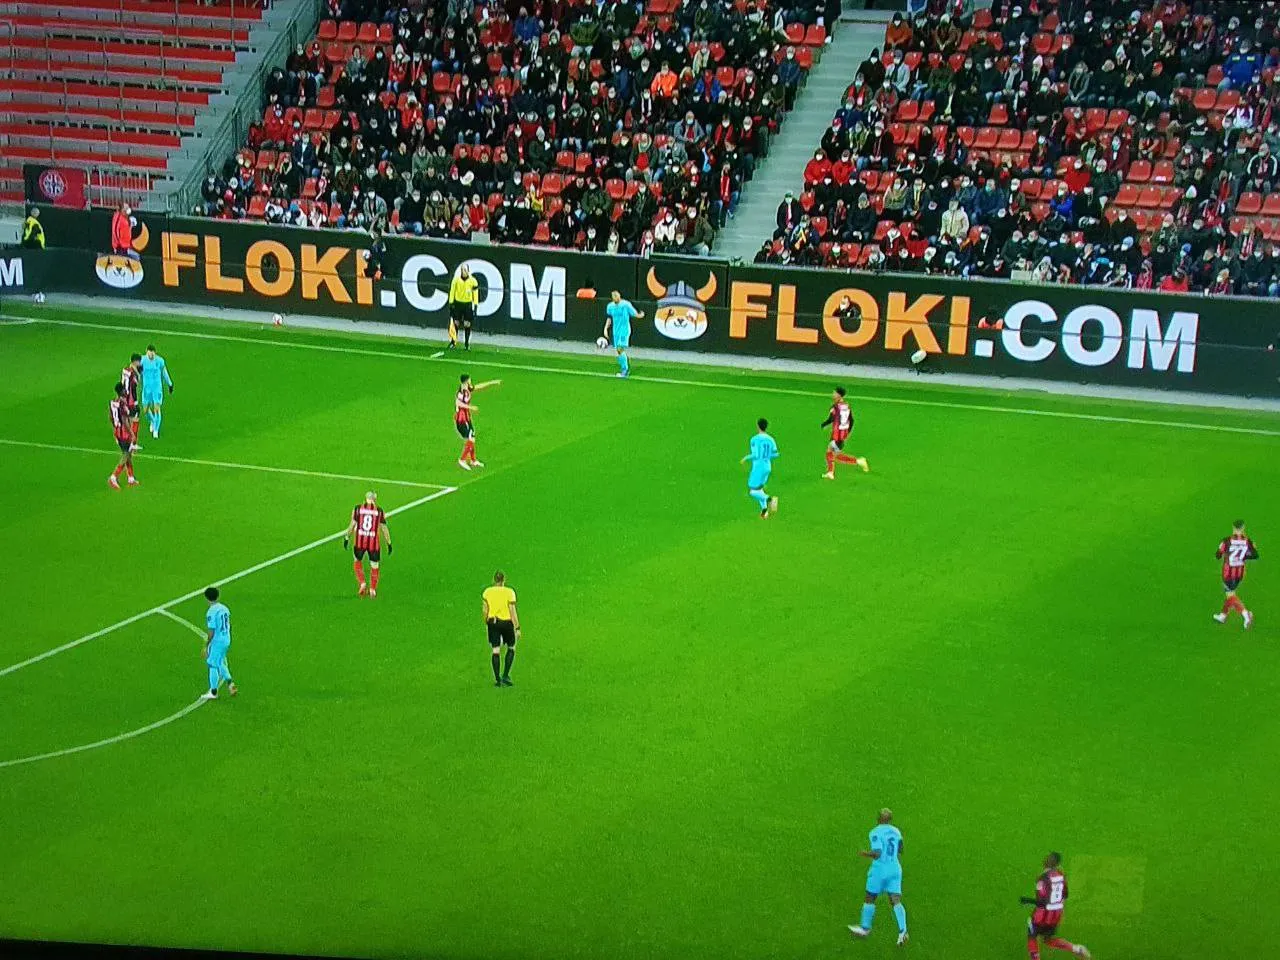 A Floki ad in a football stadium.